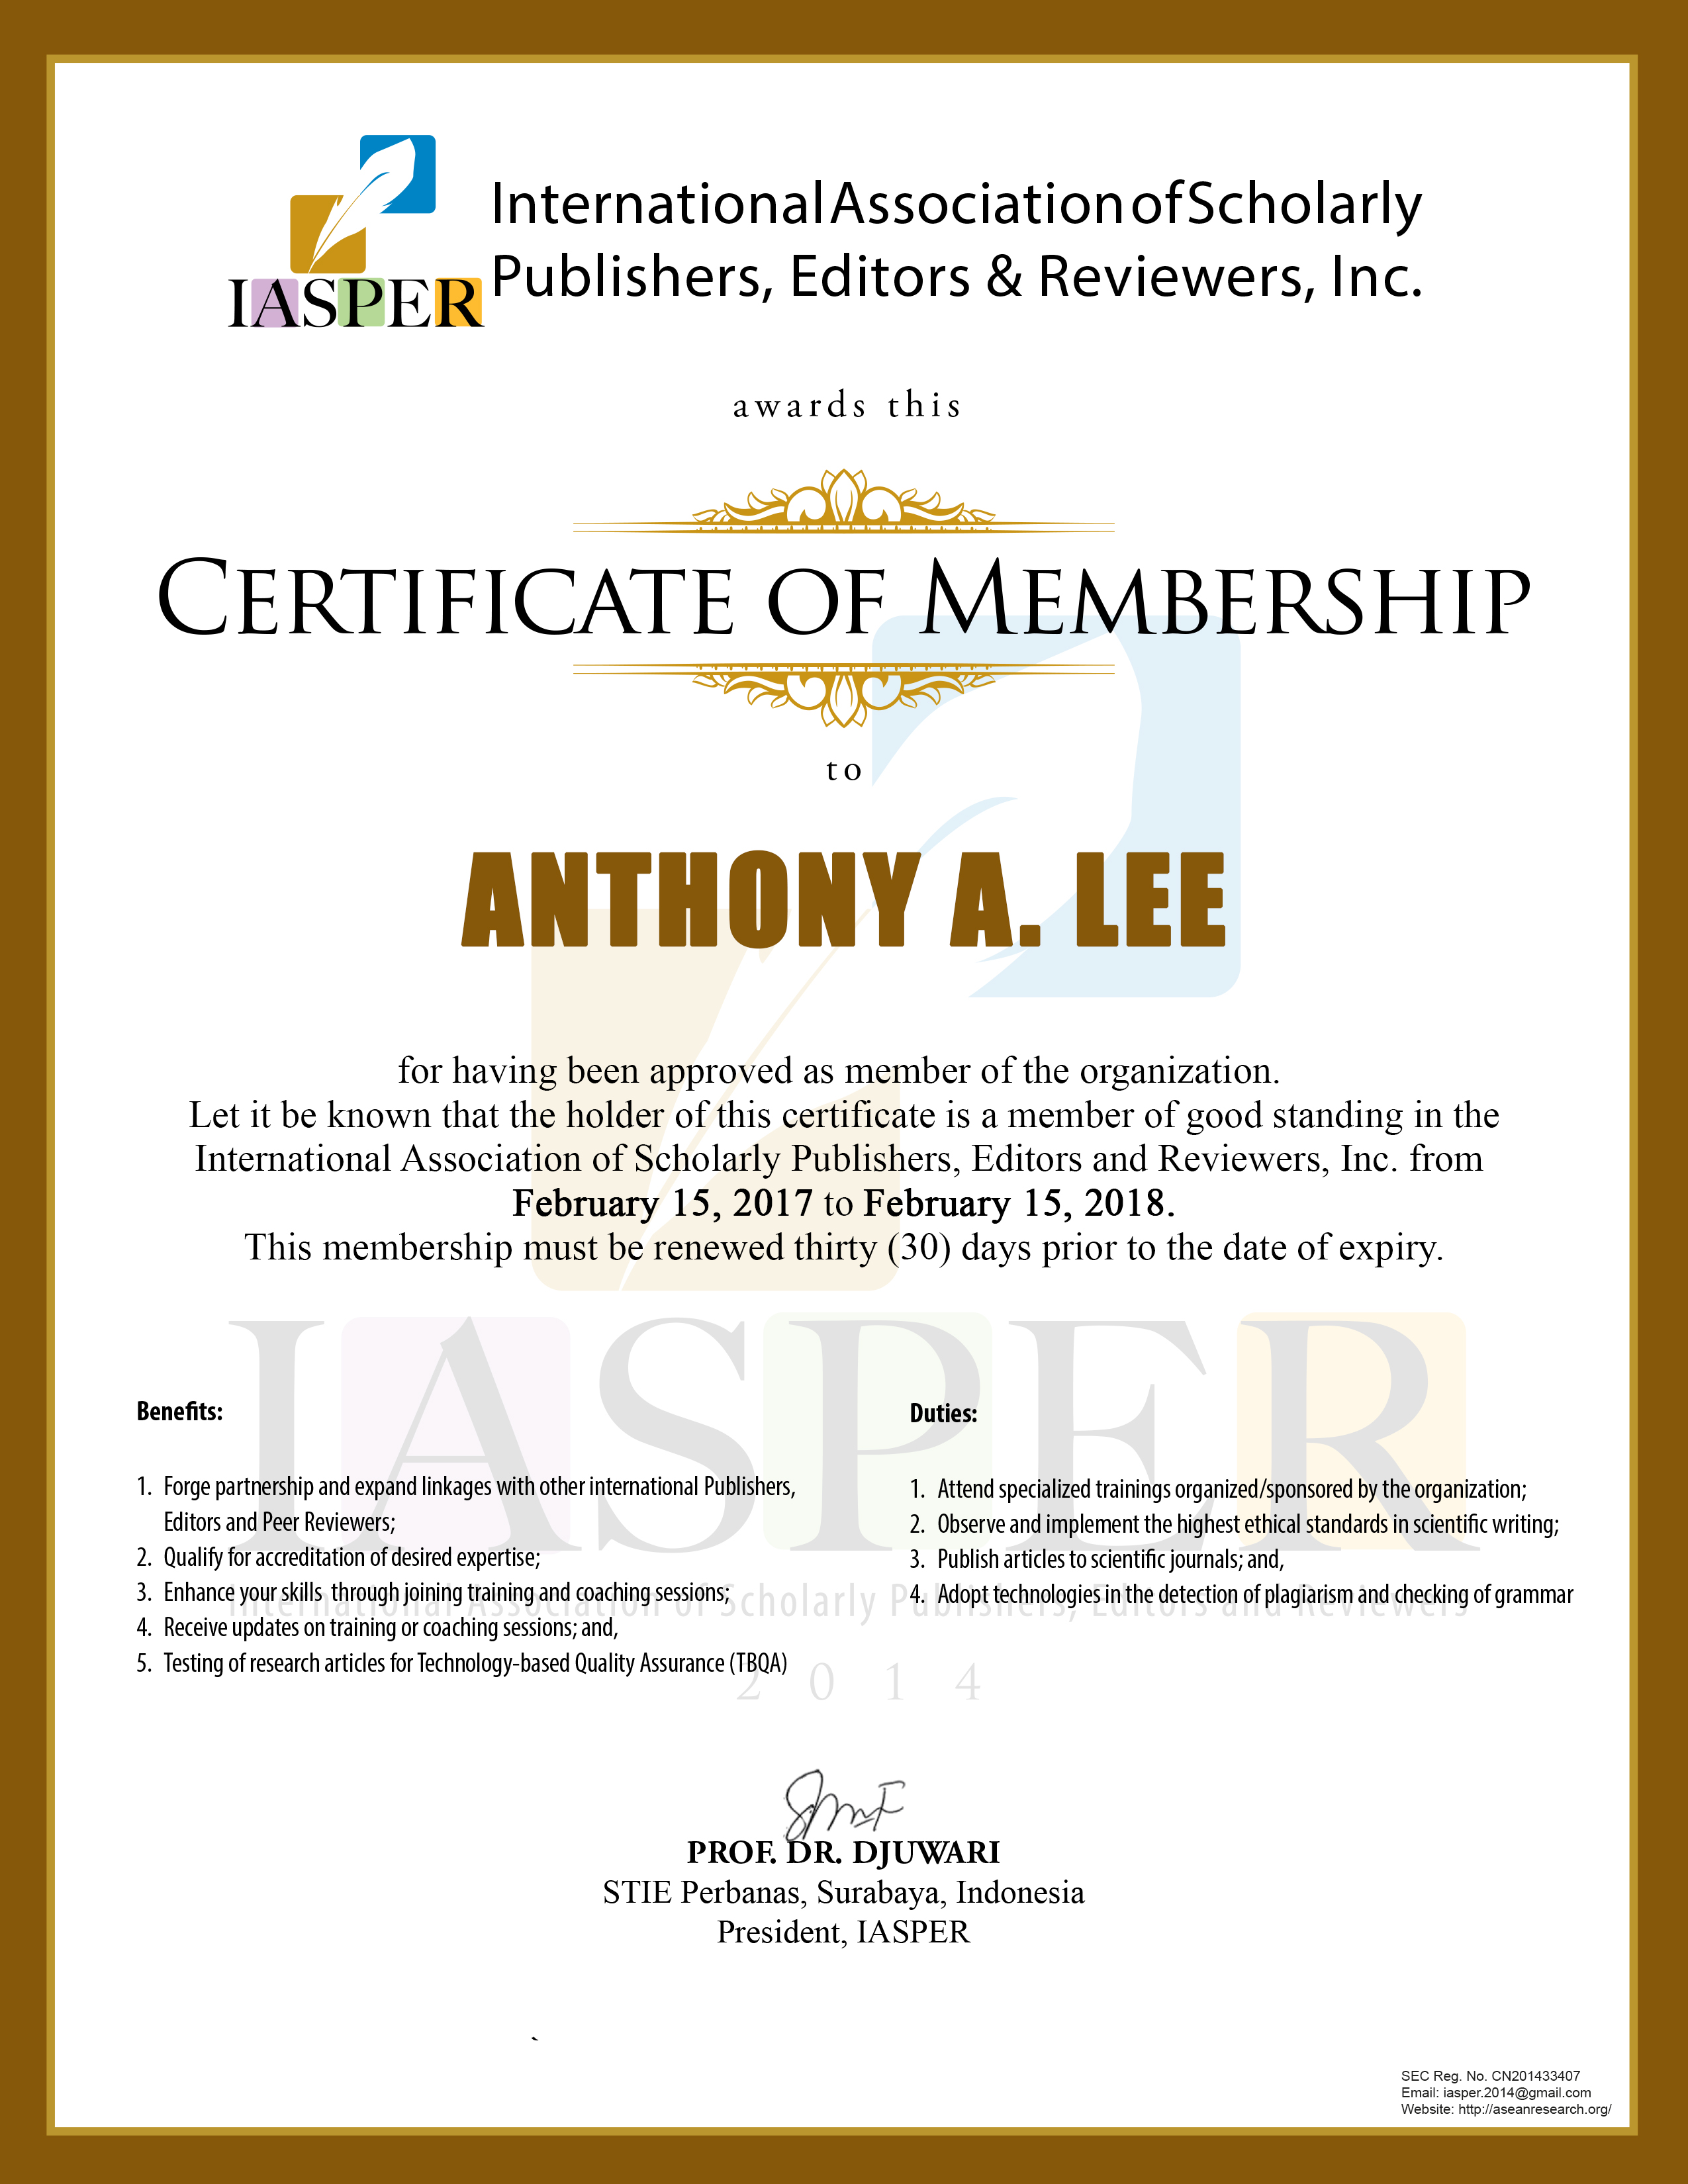 Asean Research Organization - Membership